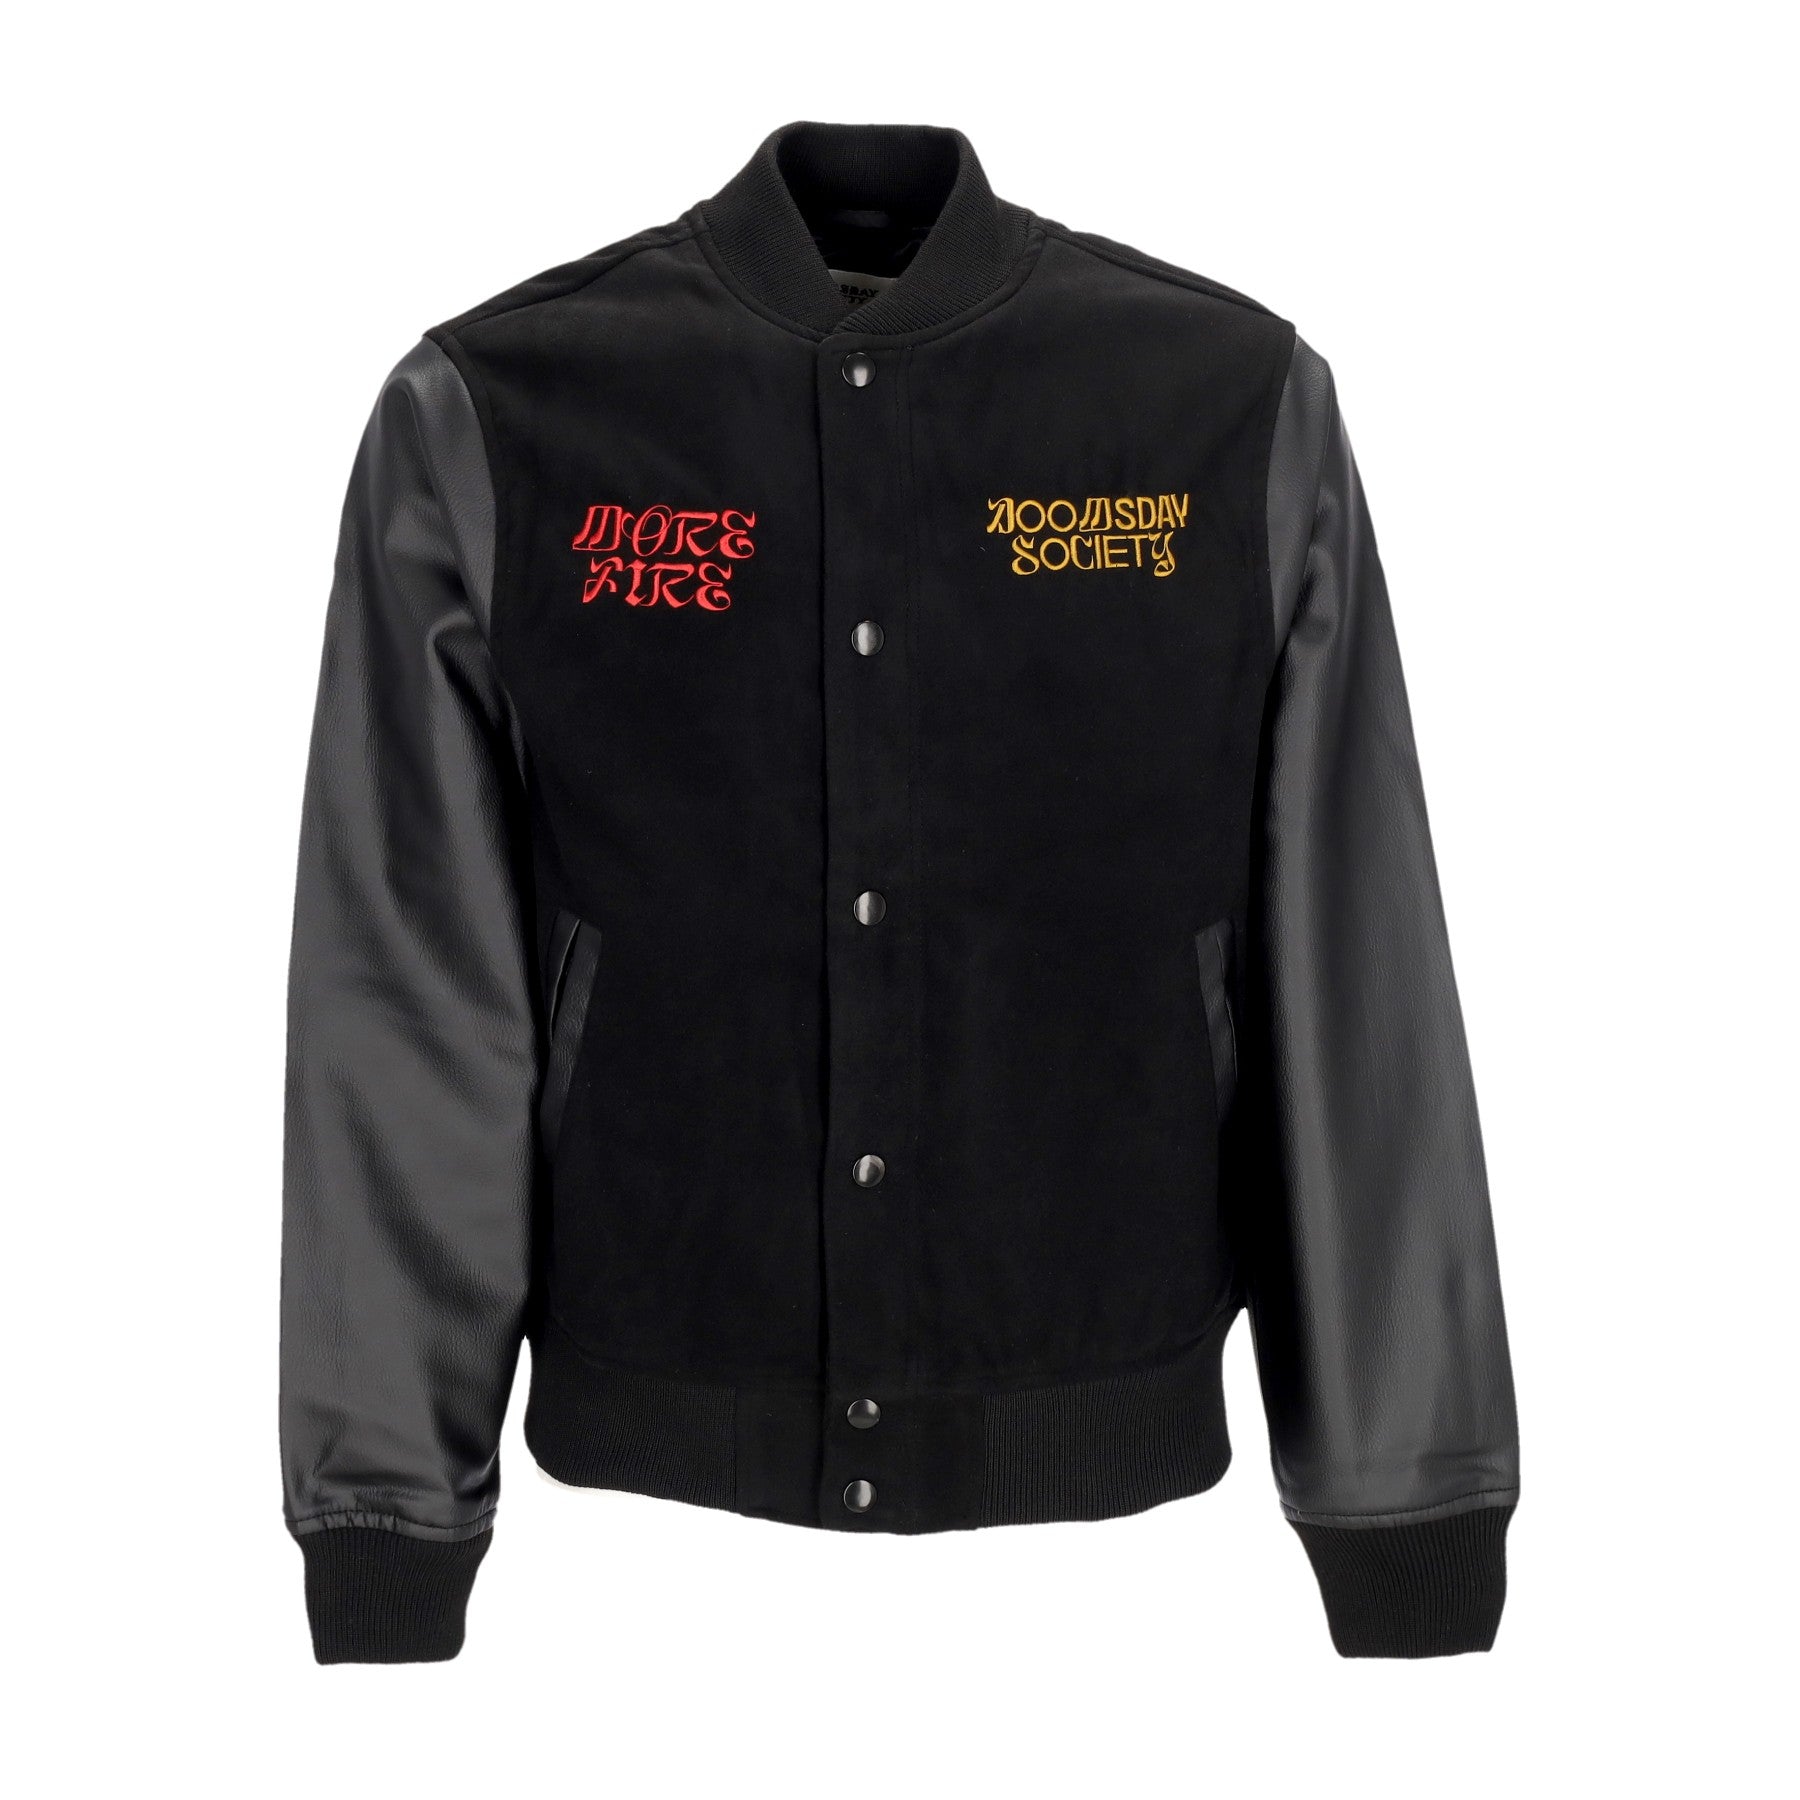 Doomsday, Giubbotto College Uomo More Fire Varsity Jacket, Black